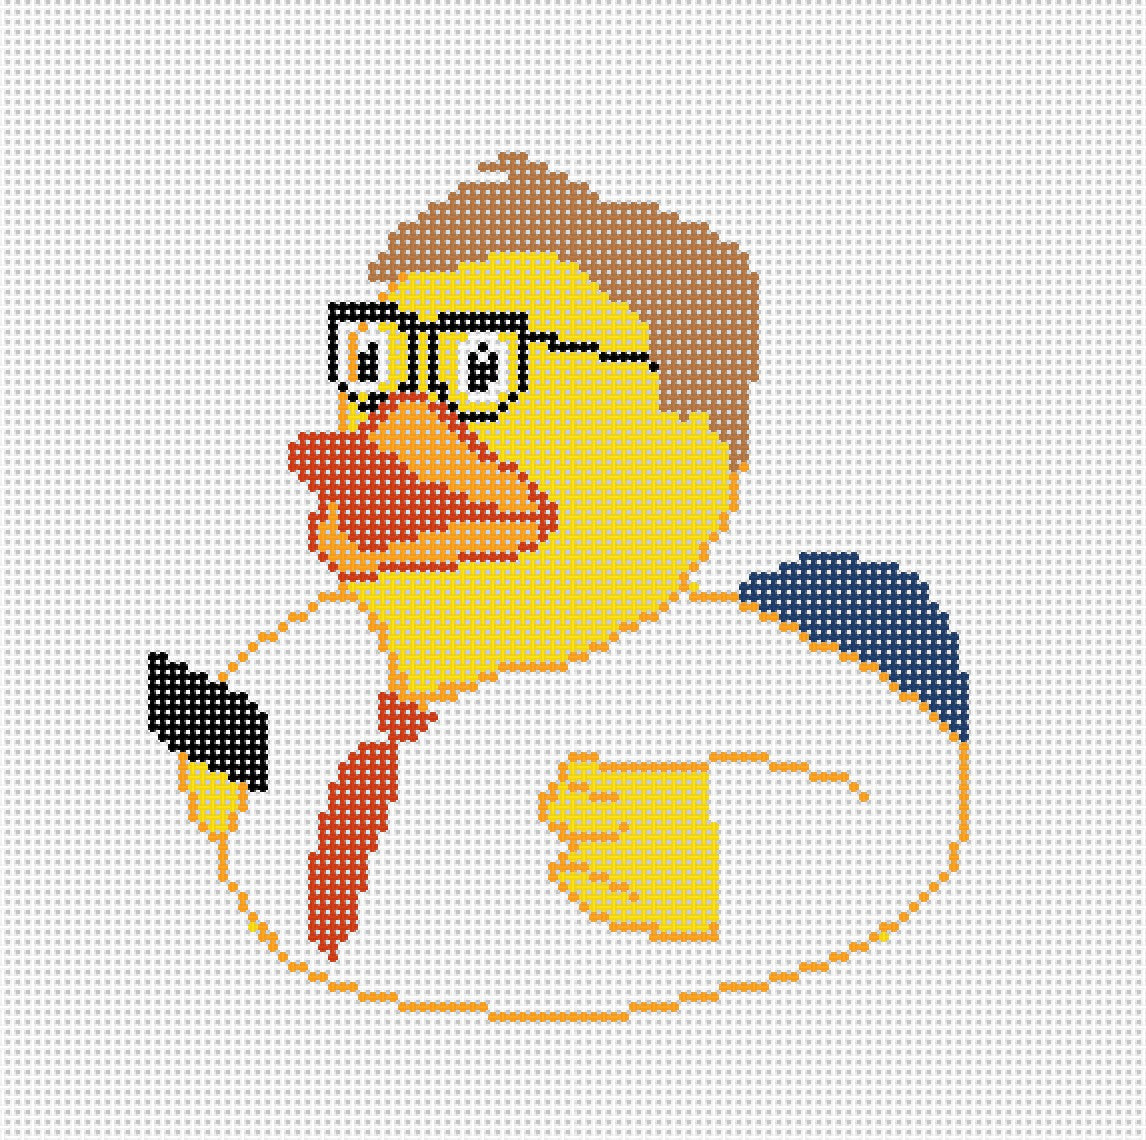 Businessman Duck